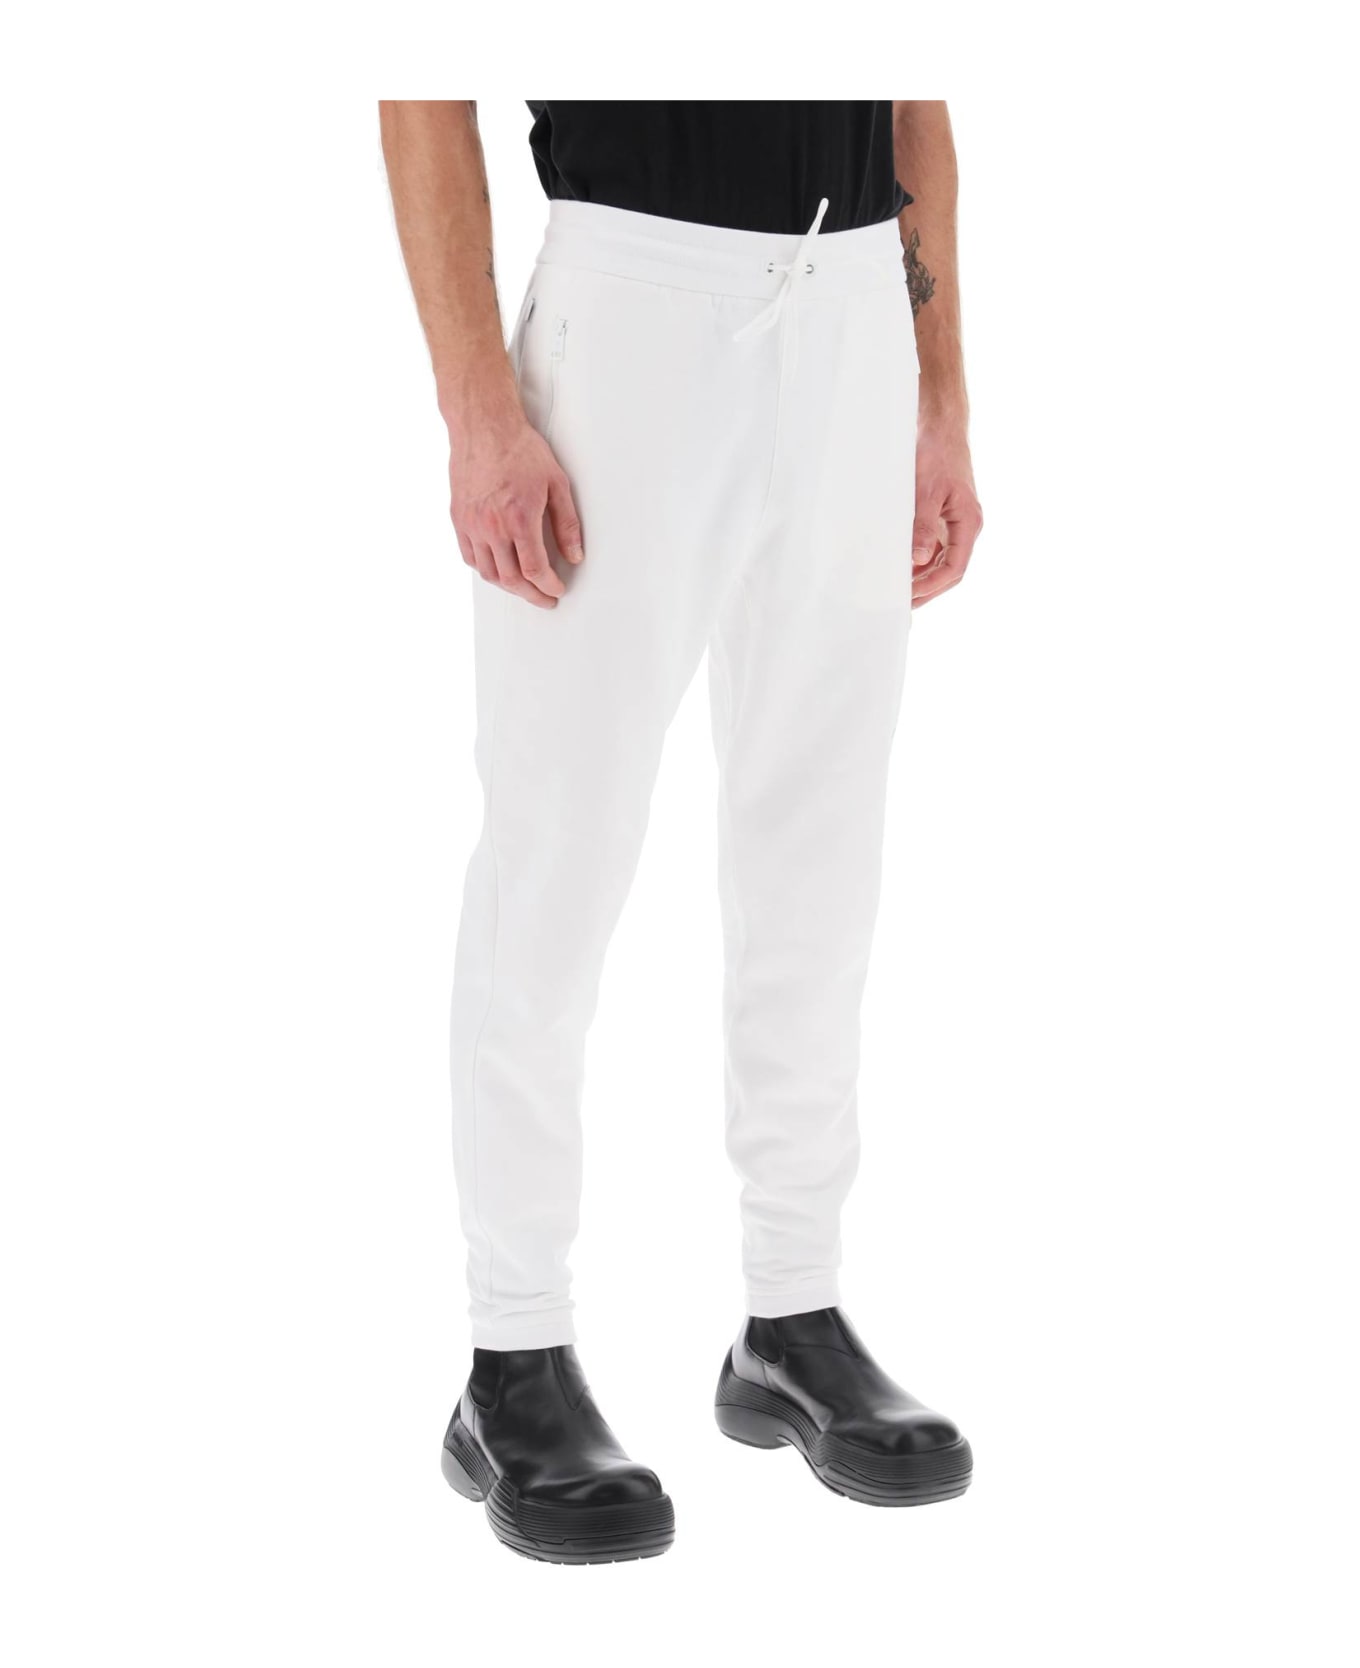 Moncler Genius Tapered Cotton Sweatpants - WHITE (White)